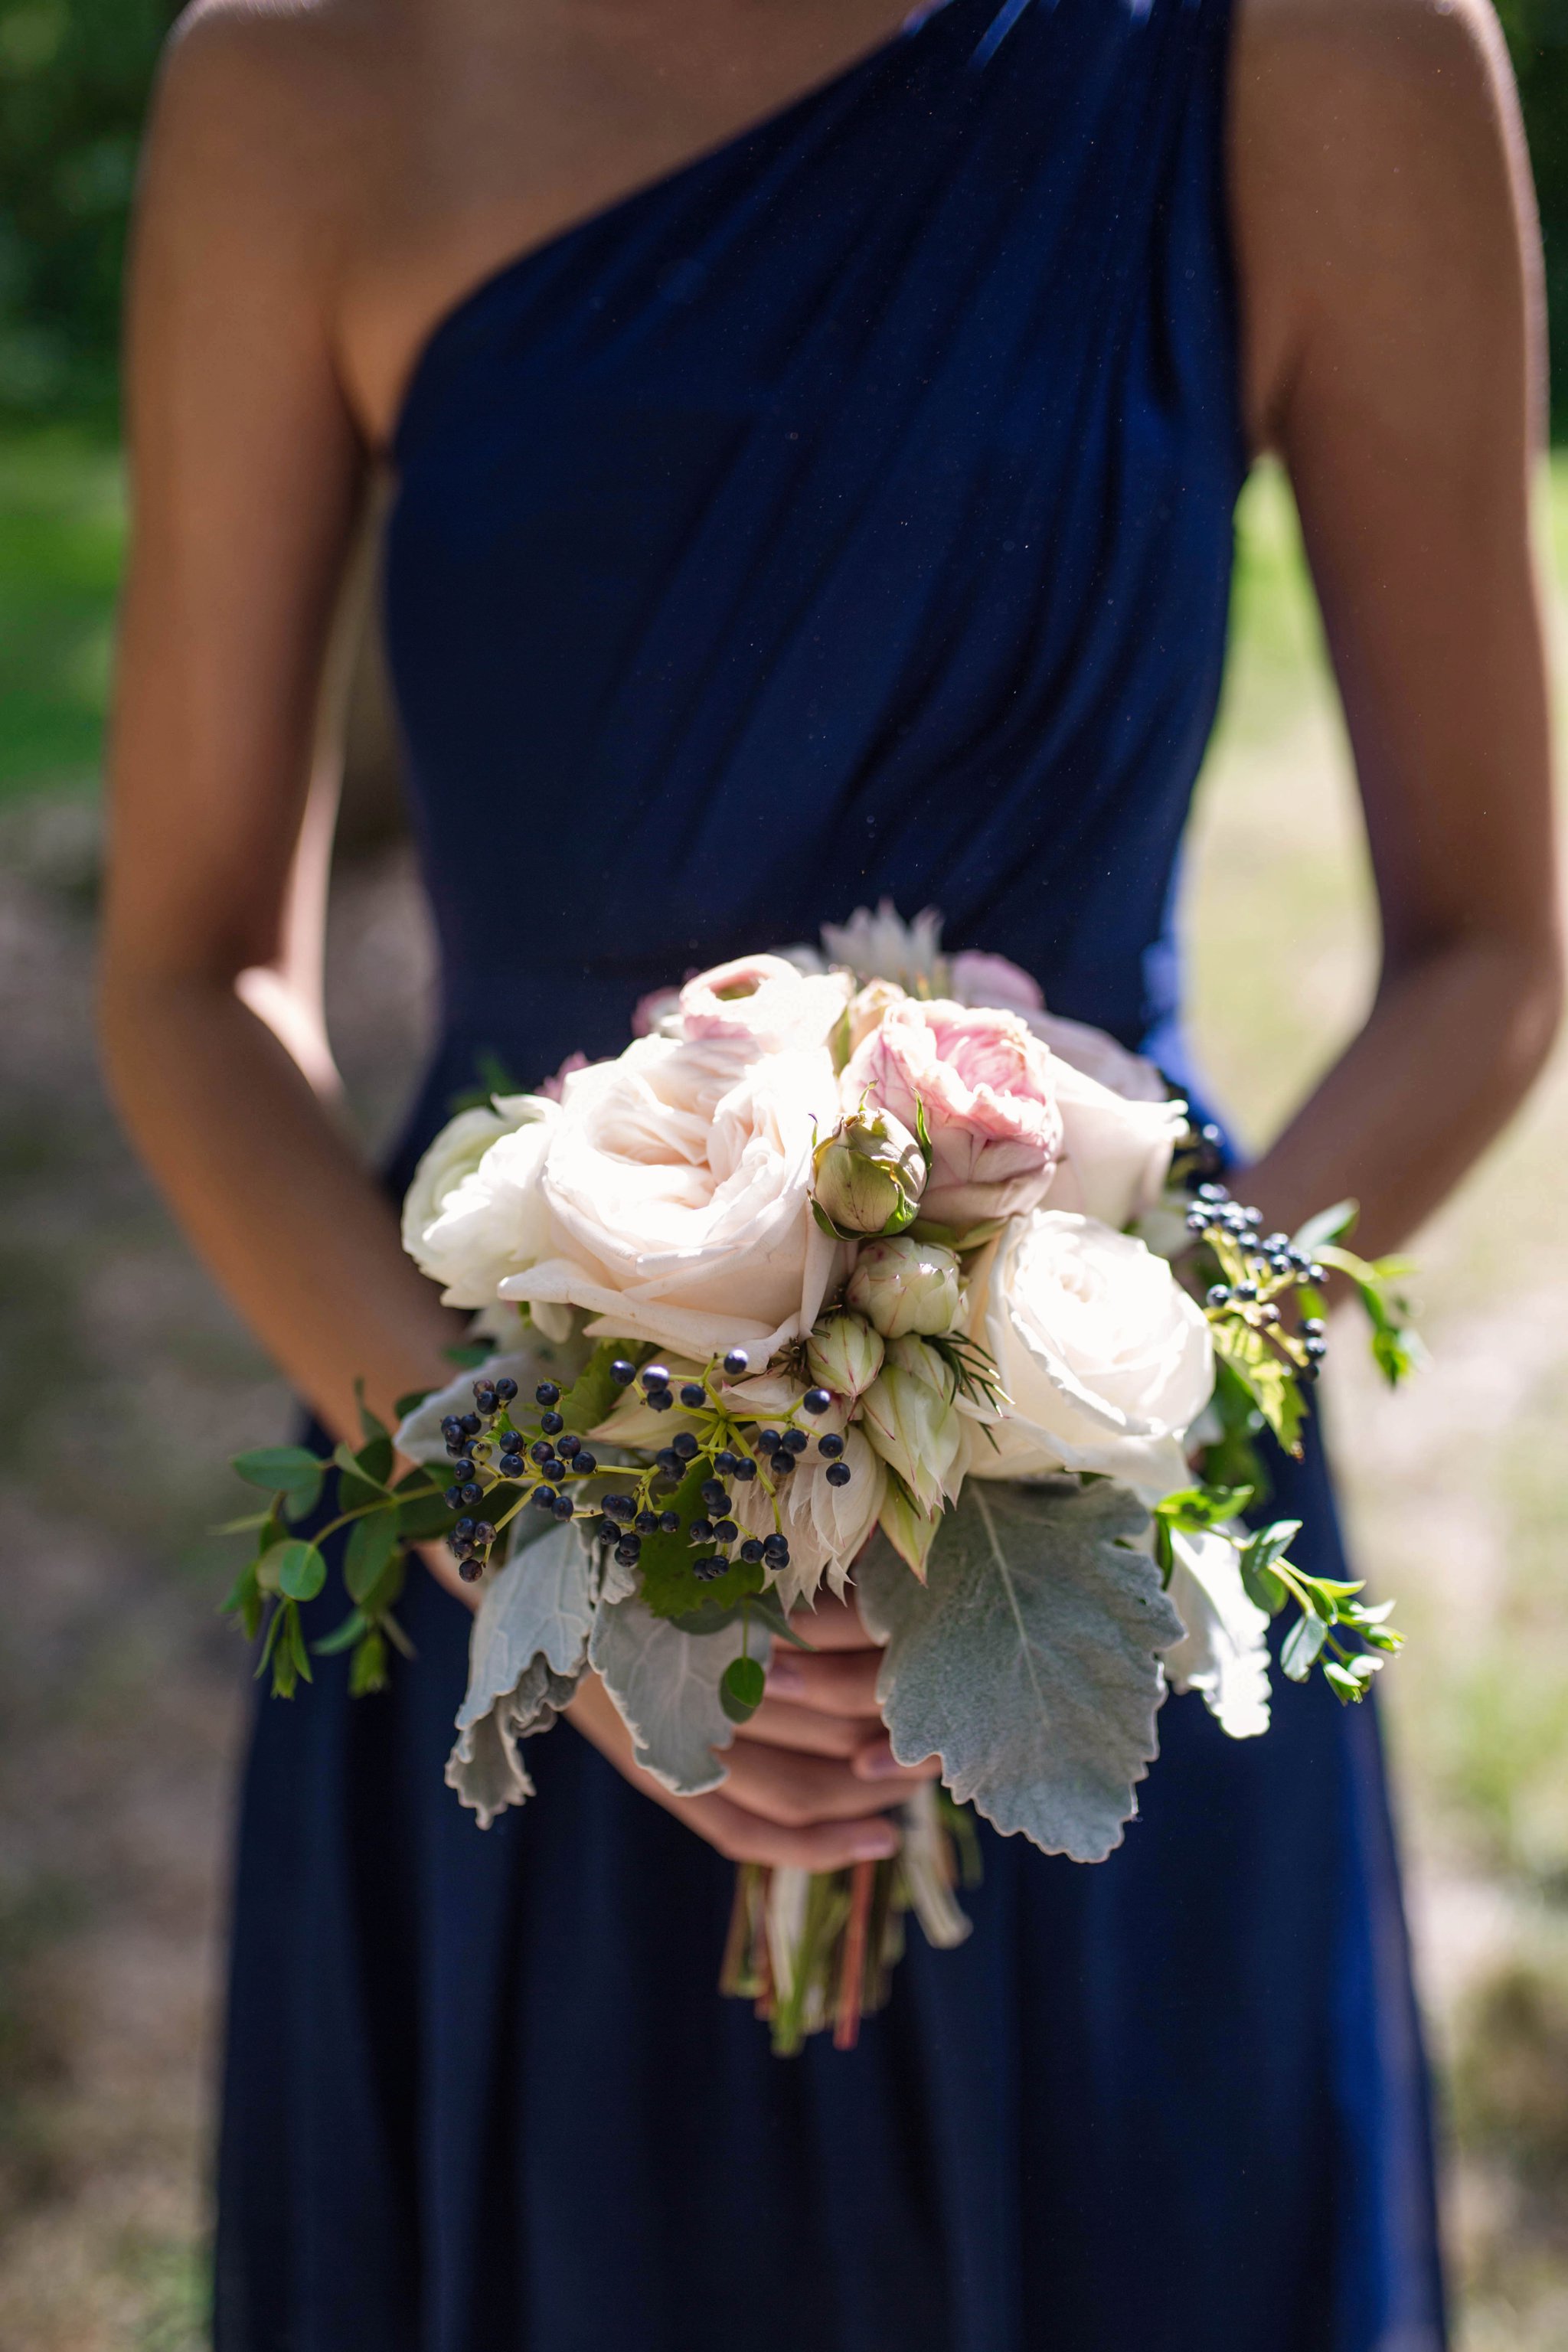 Sioux Falls Wedding Photos | Destination Photographer | Felicia The Photographer | Mary Jo Wegner Arboretum | Bridesmaid bouquet | Dusty Miller | Greenery | White Roses | Peonies | Blue Berries